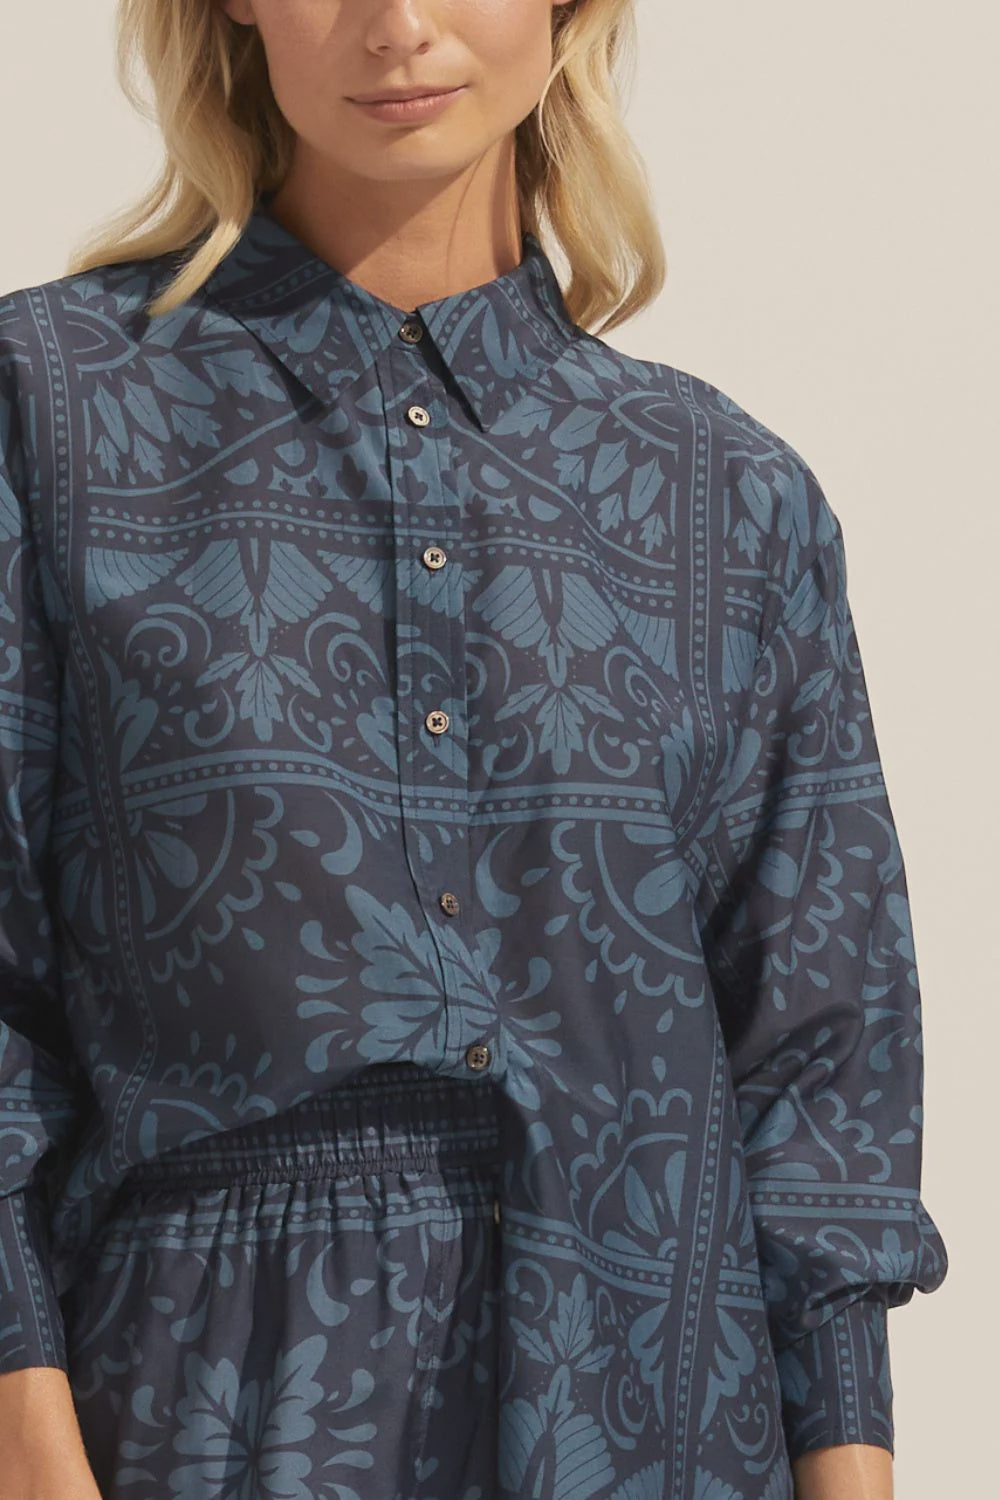 Reflex Top - Indigo Mosaic blouse Zoe Kratzmann   